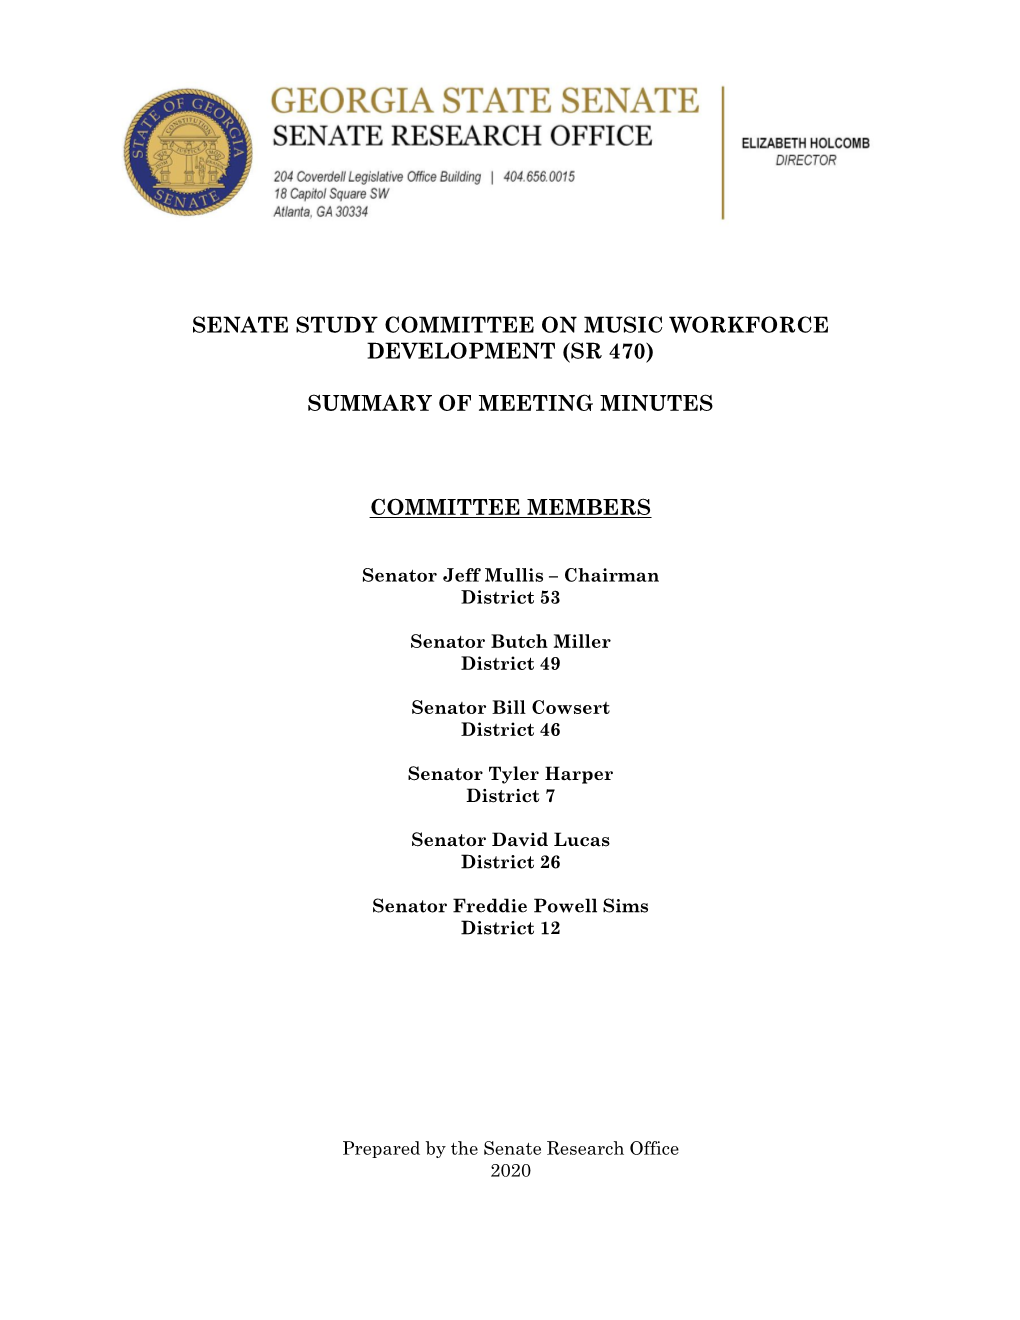 Senate Study Committee on Music Workforce Development (Sr 470)